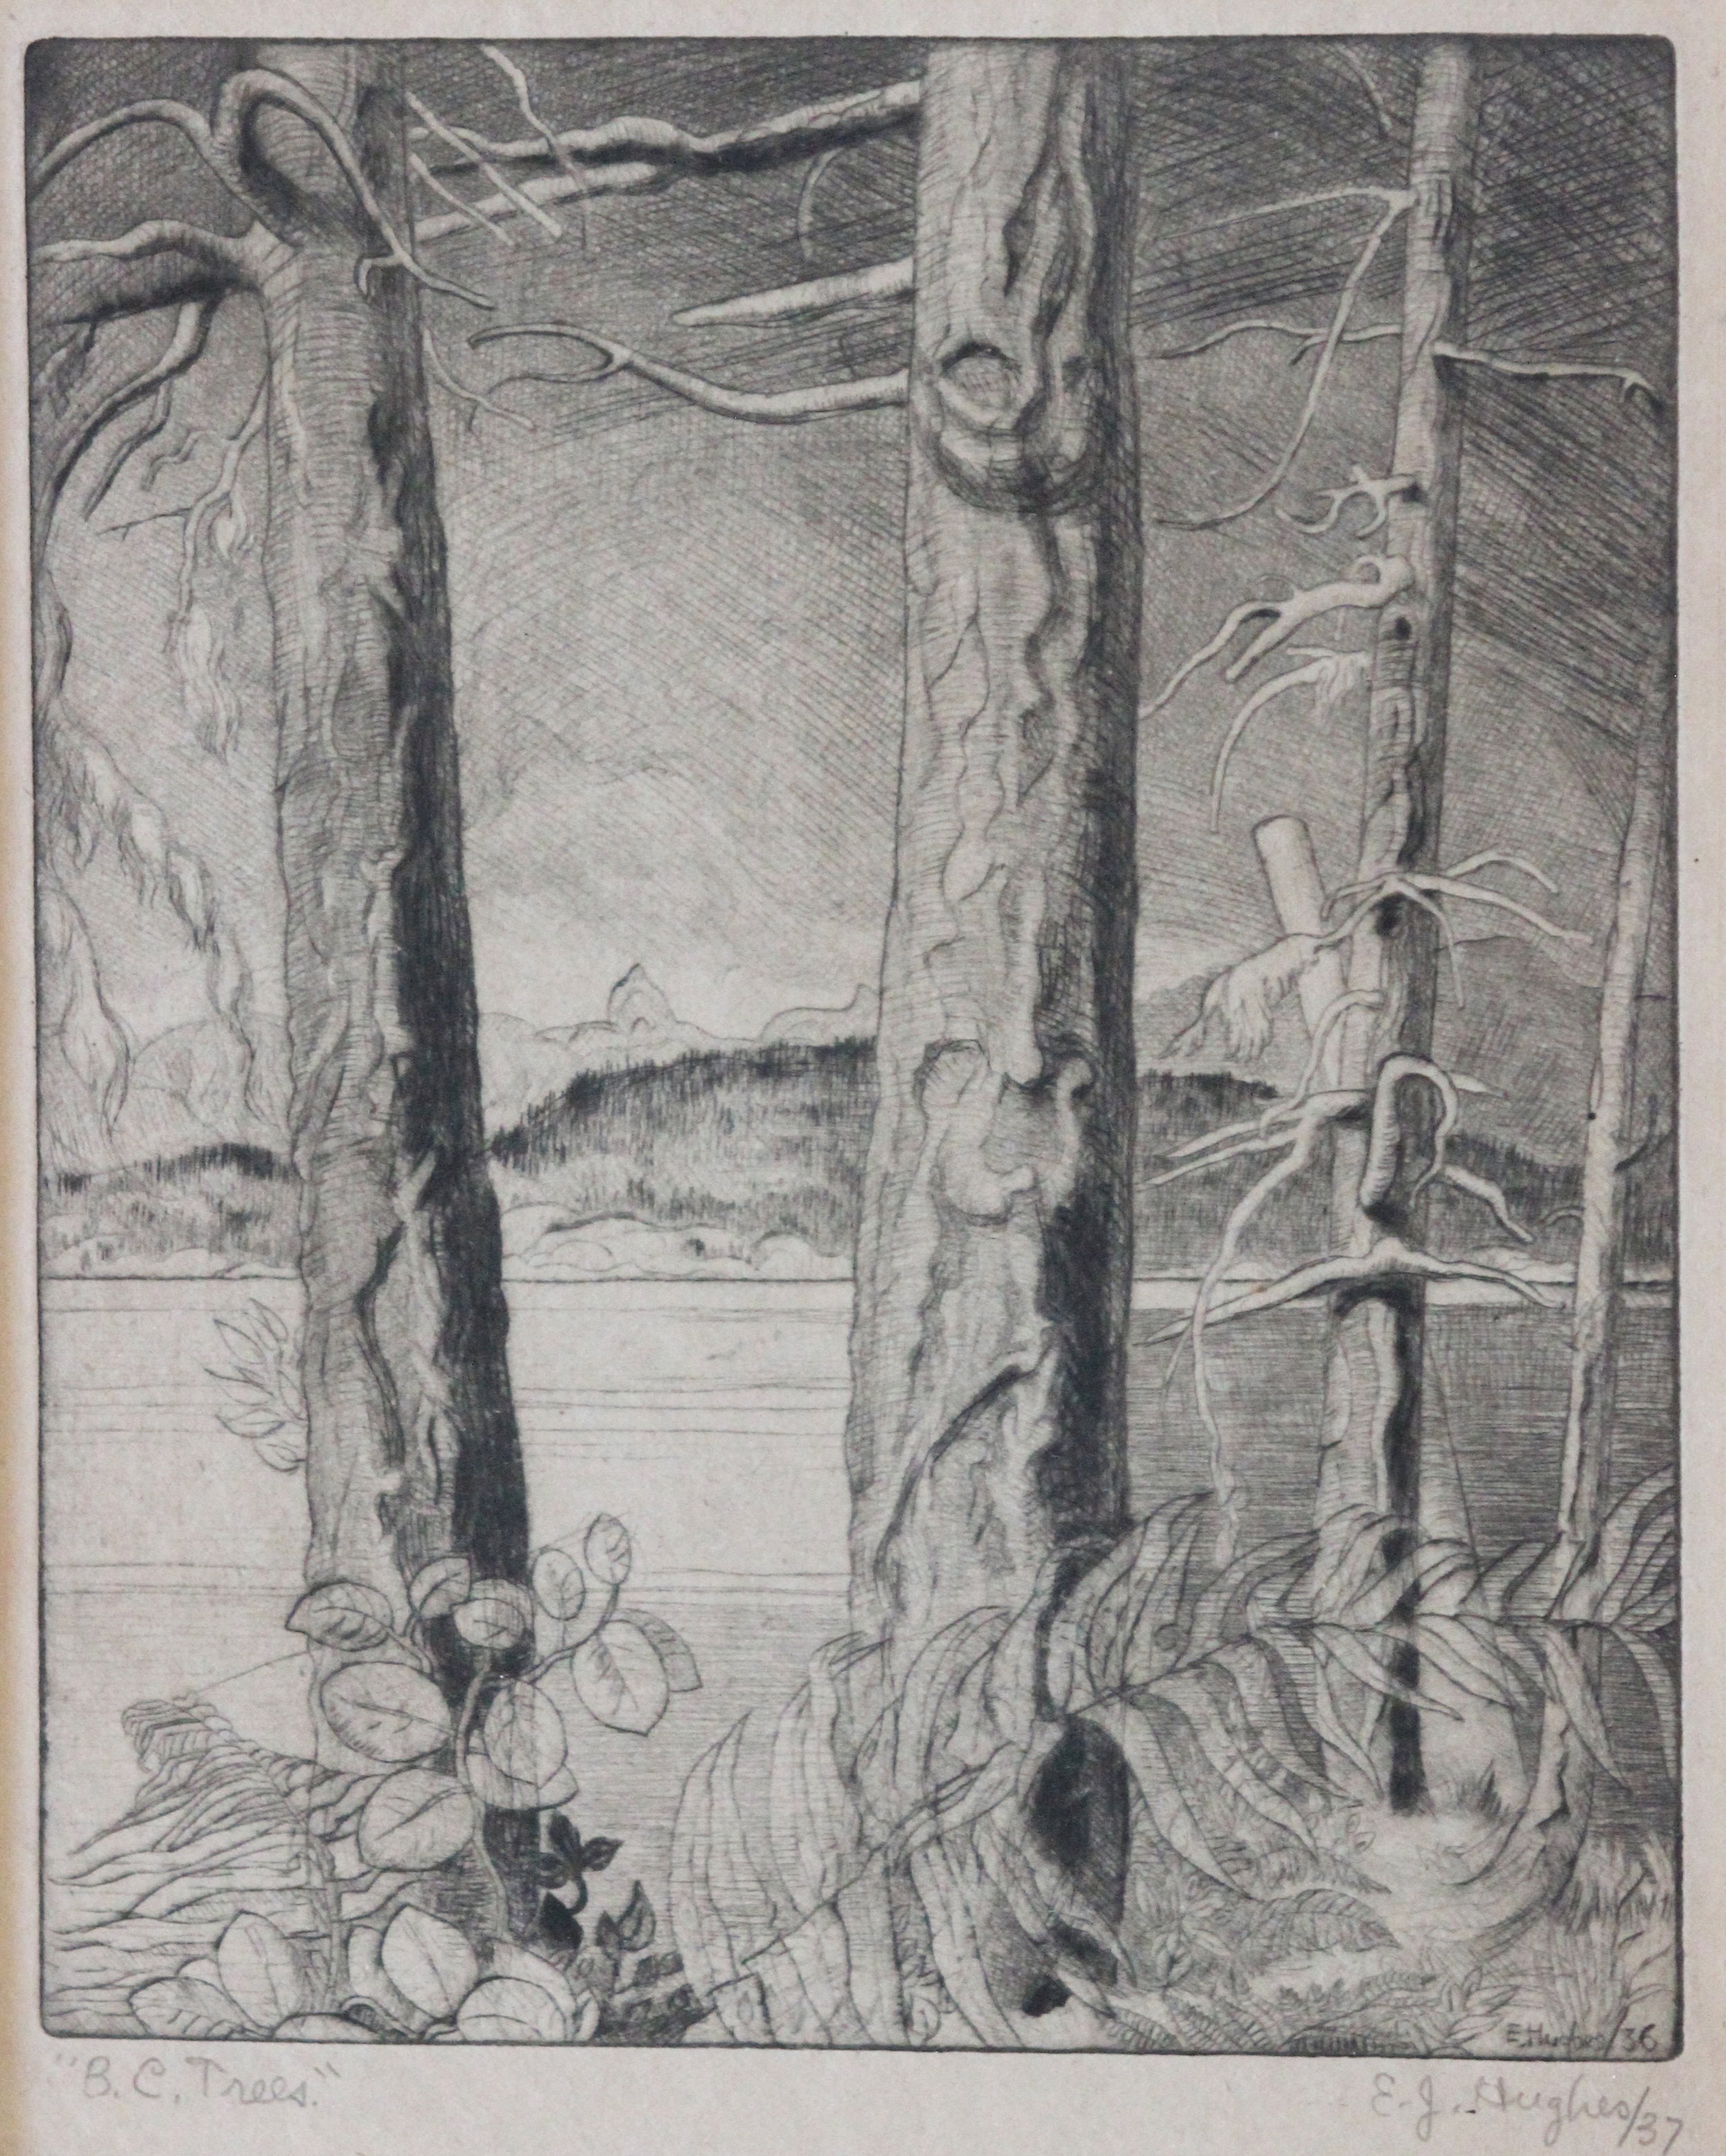 E.J Hughes, BC Trees, 1936/37